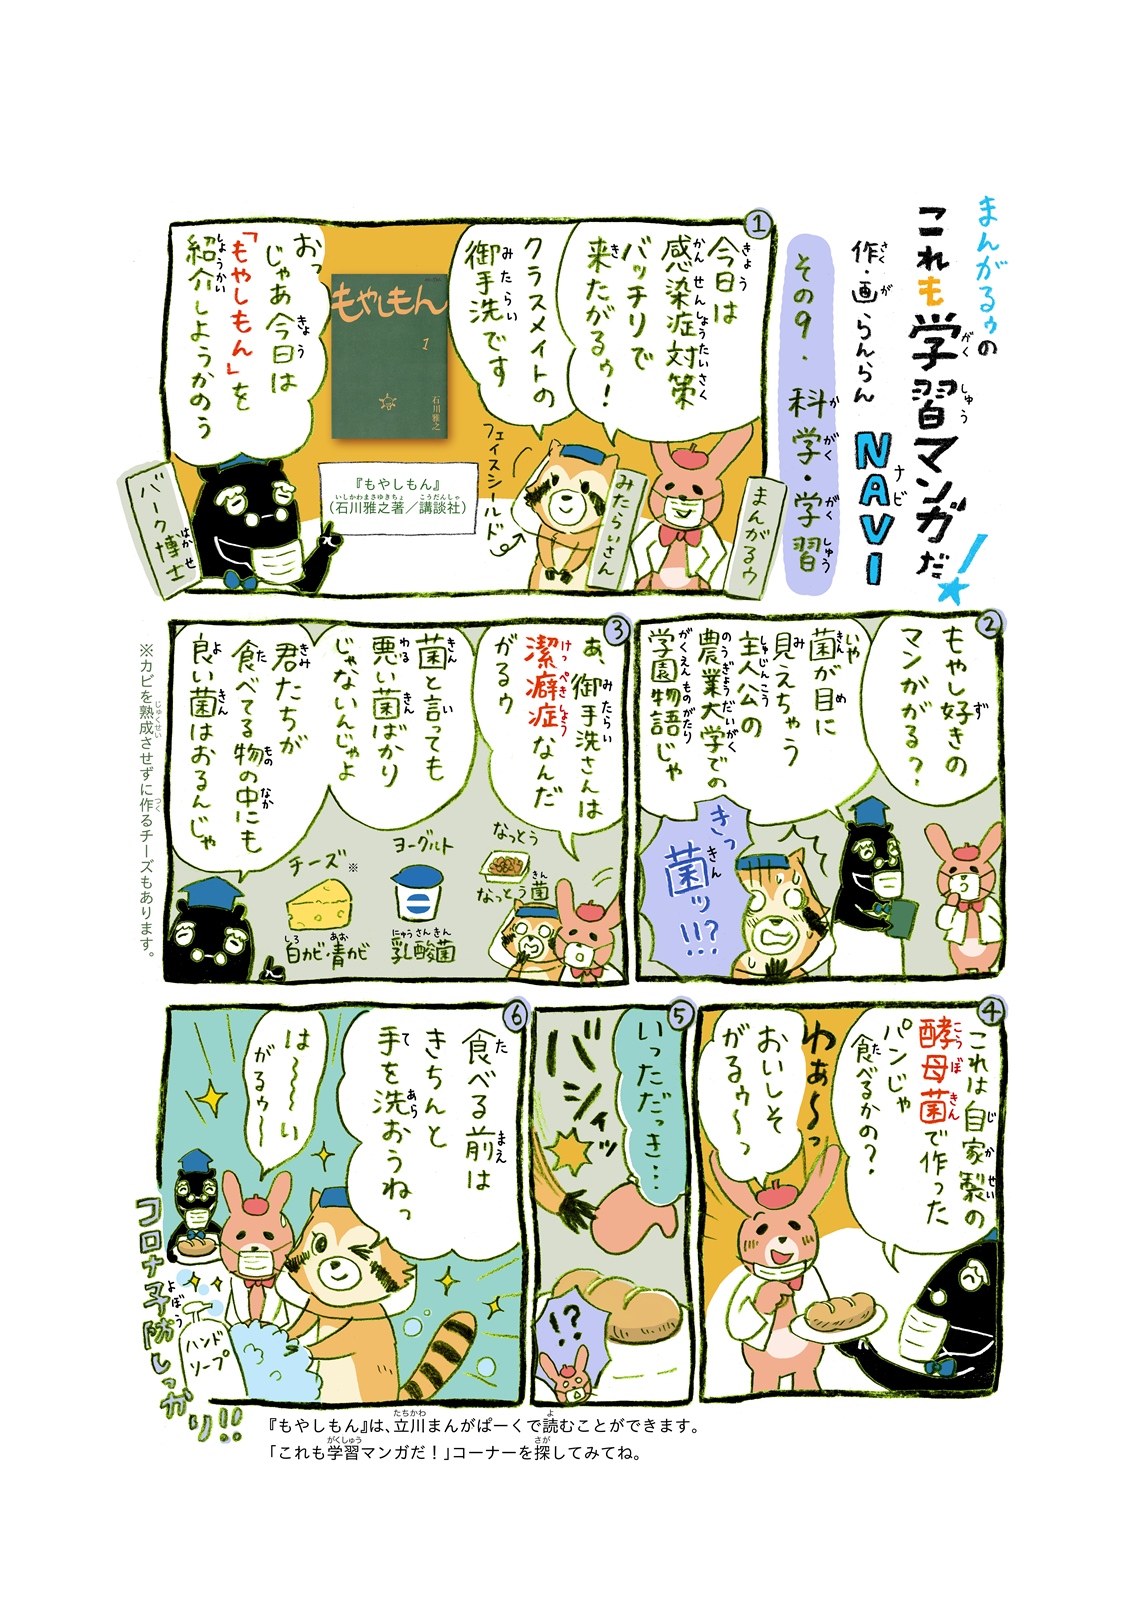 https://mangapark.jp/topics/2020/07/24/images/mangaloo_vol10.jpg